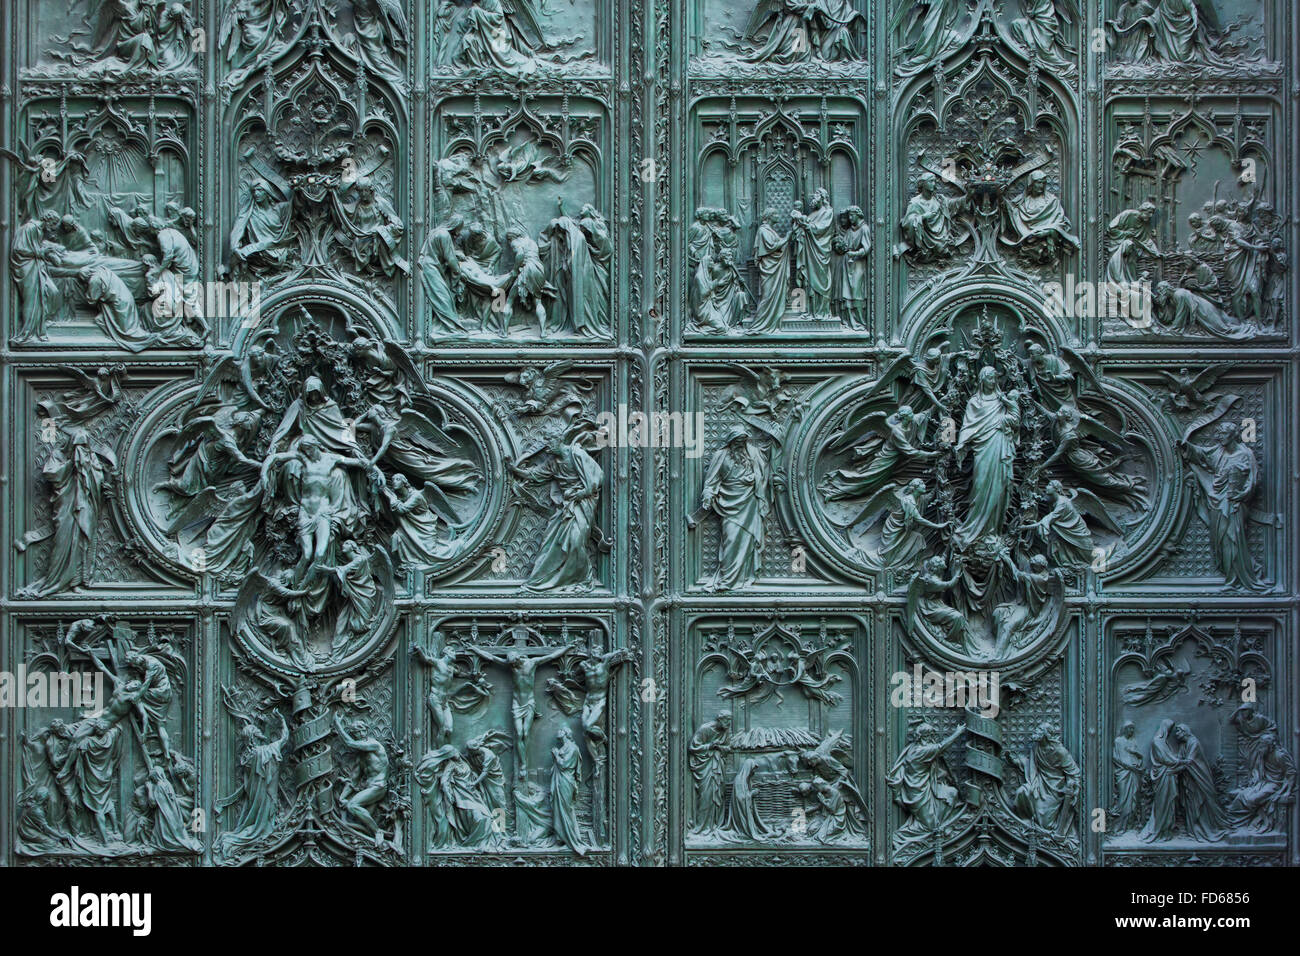 Main bronze door of the Milan Cathedral (Duomo di Milano) designed by Italian sculptor Ludovico Pogliaghi in Milan, Italy. The bronze door was designed by Italian sculptor Ludovico Pogliaghi in 1894-1908. Stock Photo